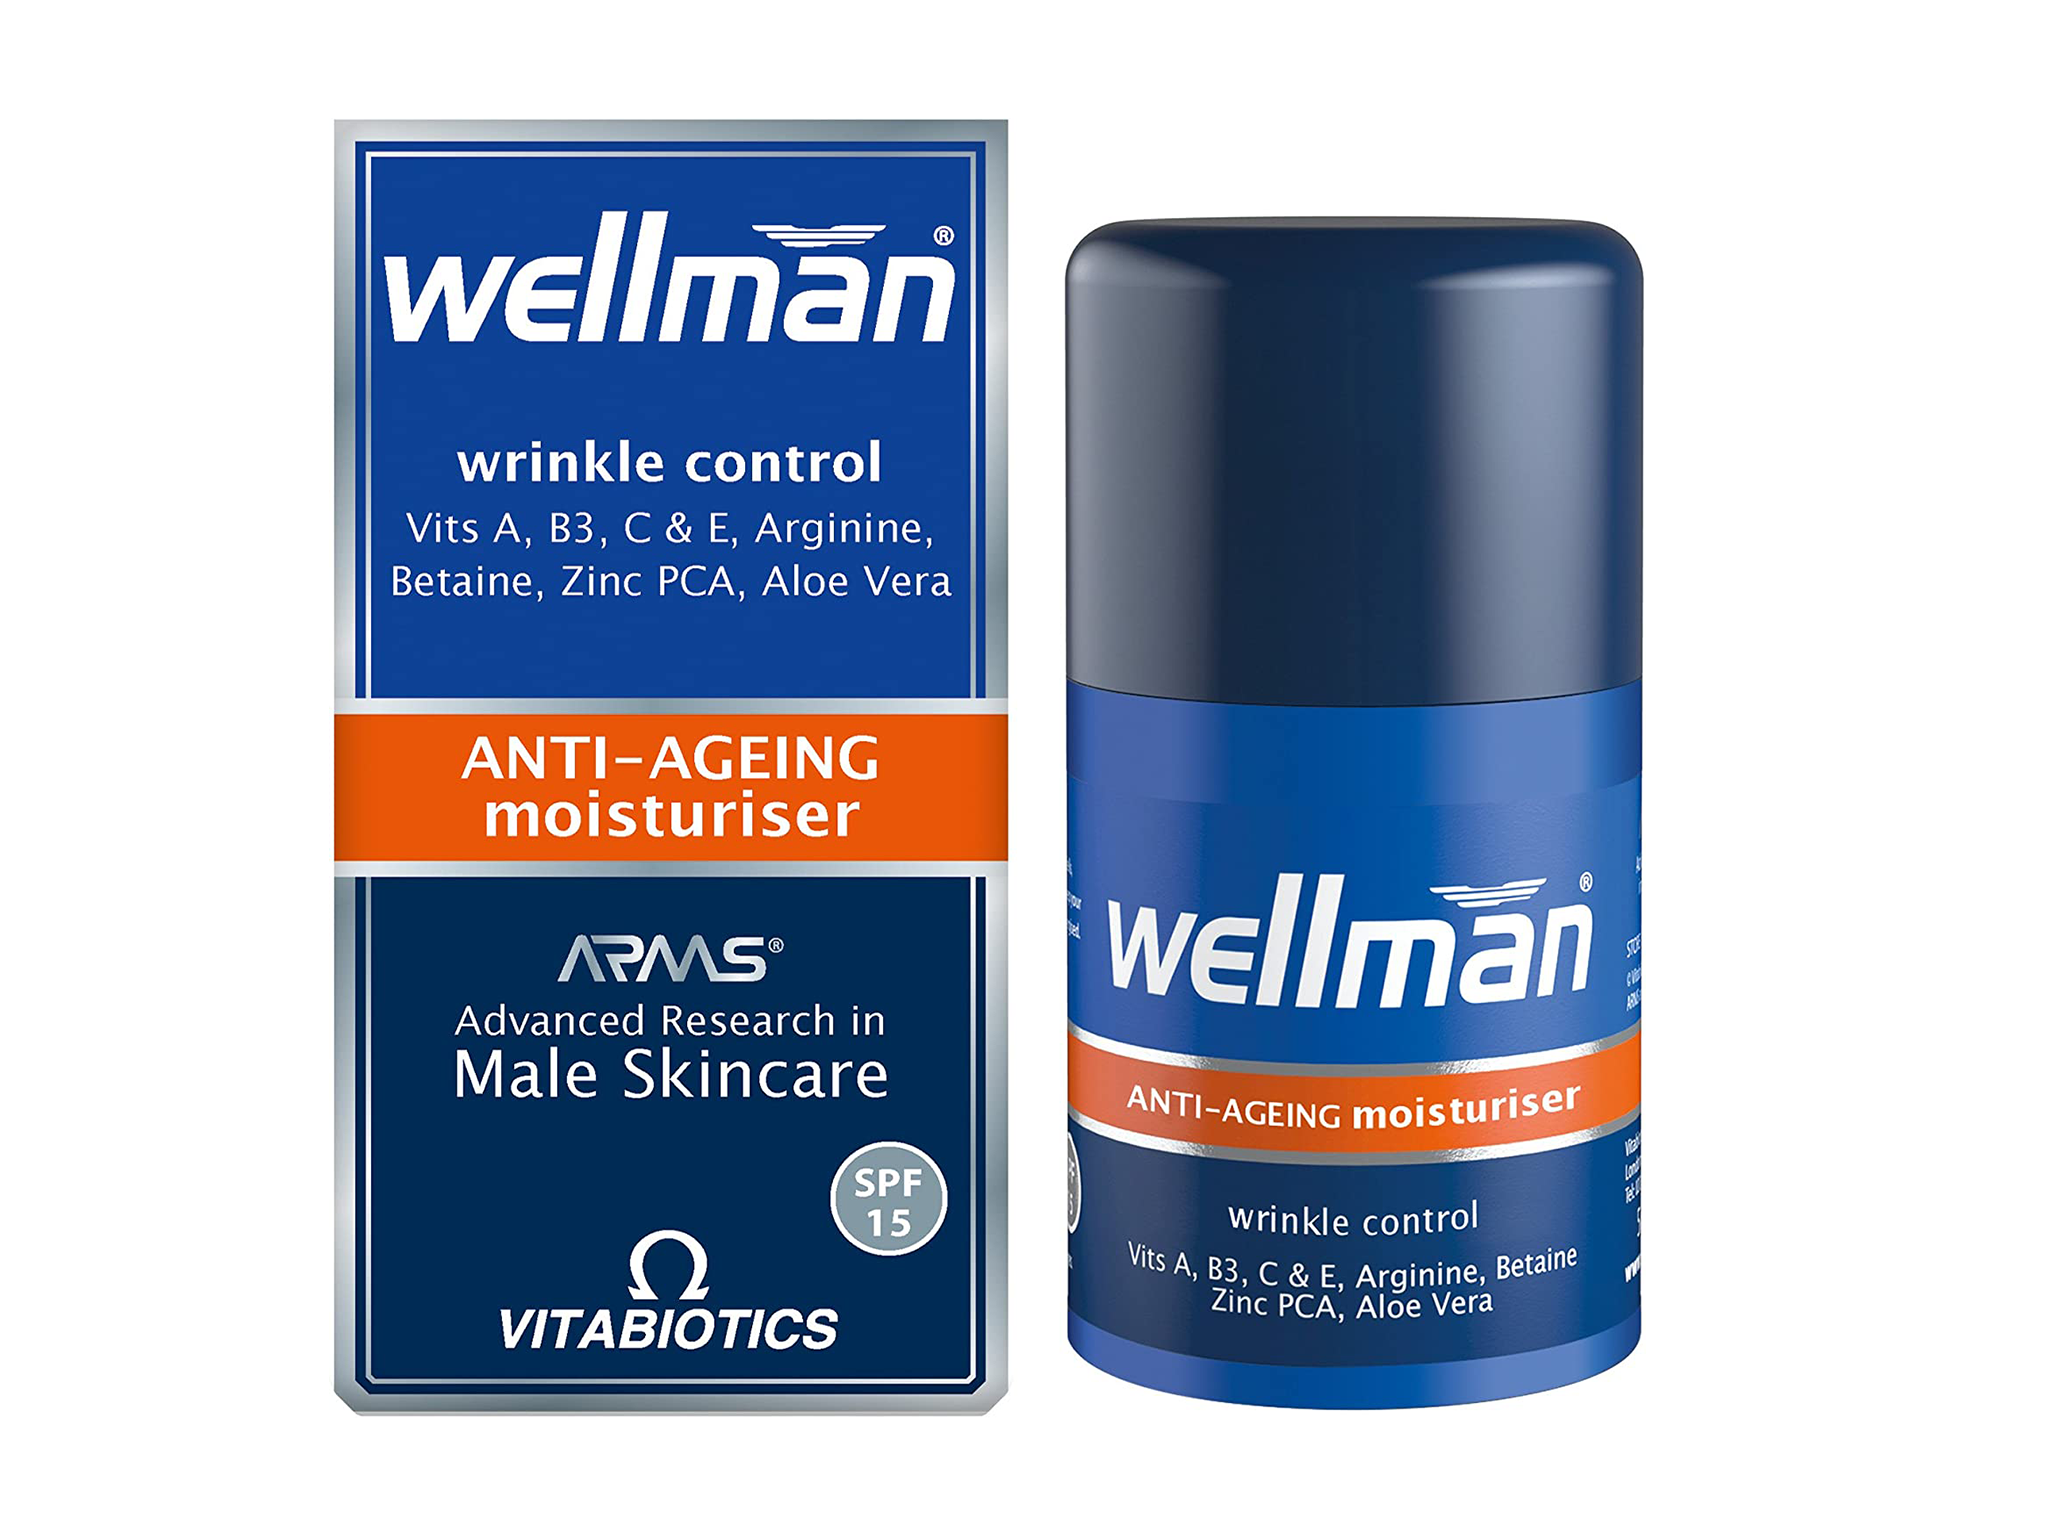 Wellman anti-ageing moisturiser